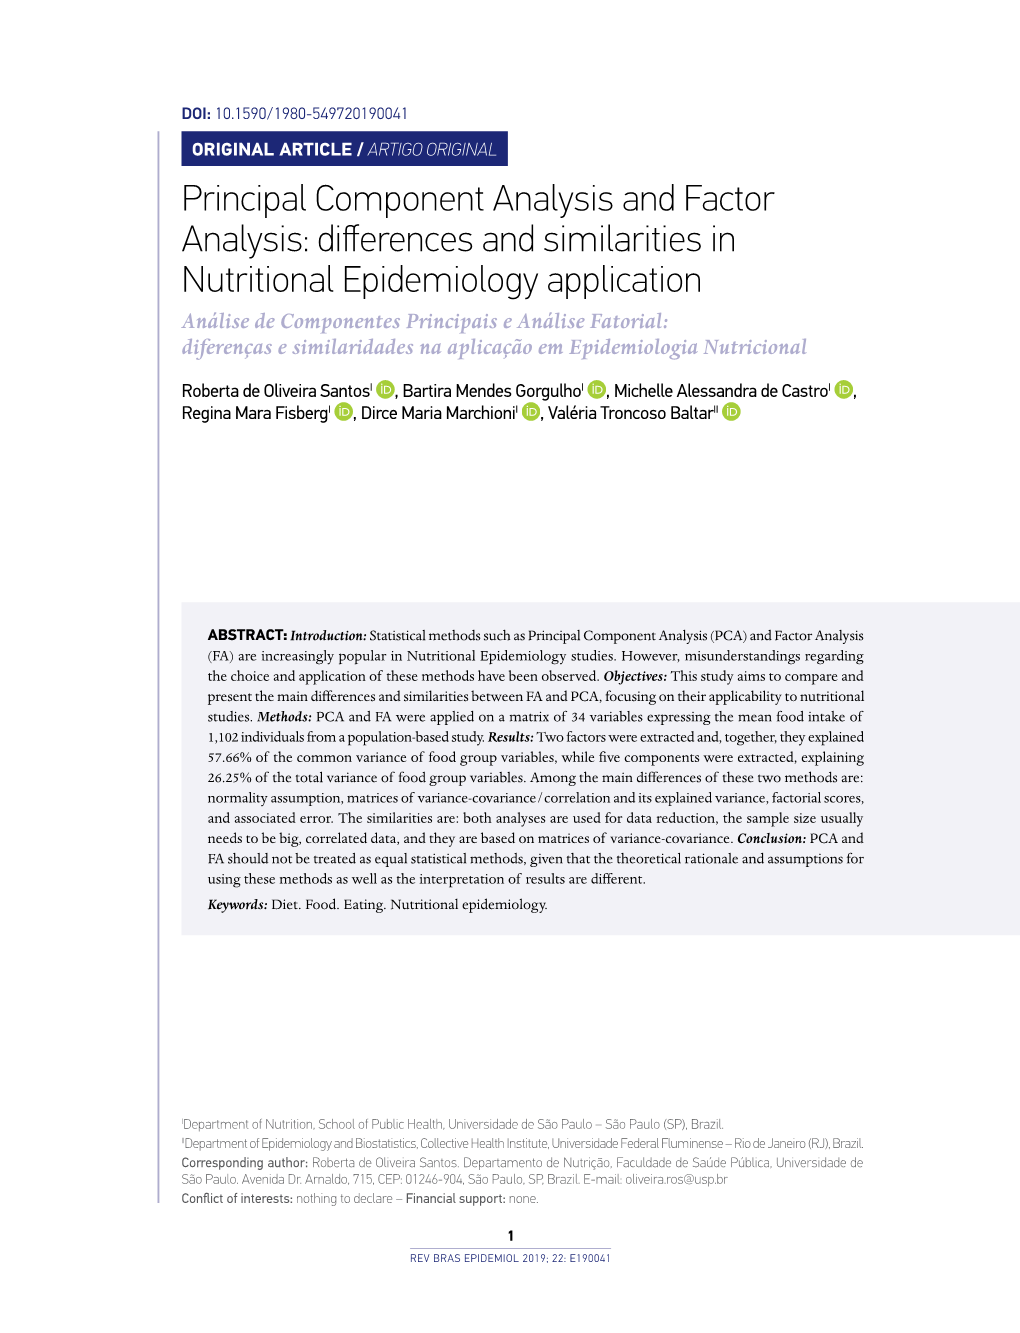 Principal Component Analysis and Factor Analysis